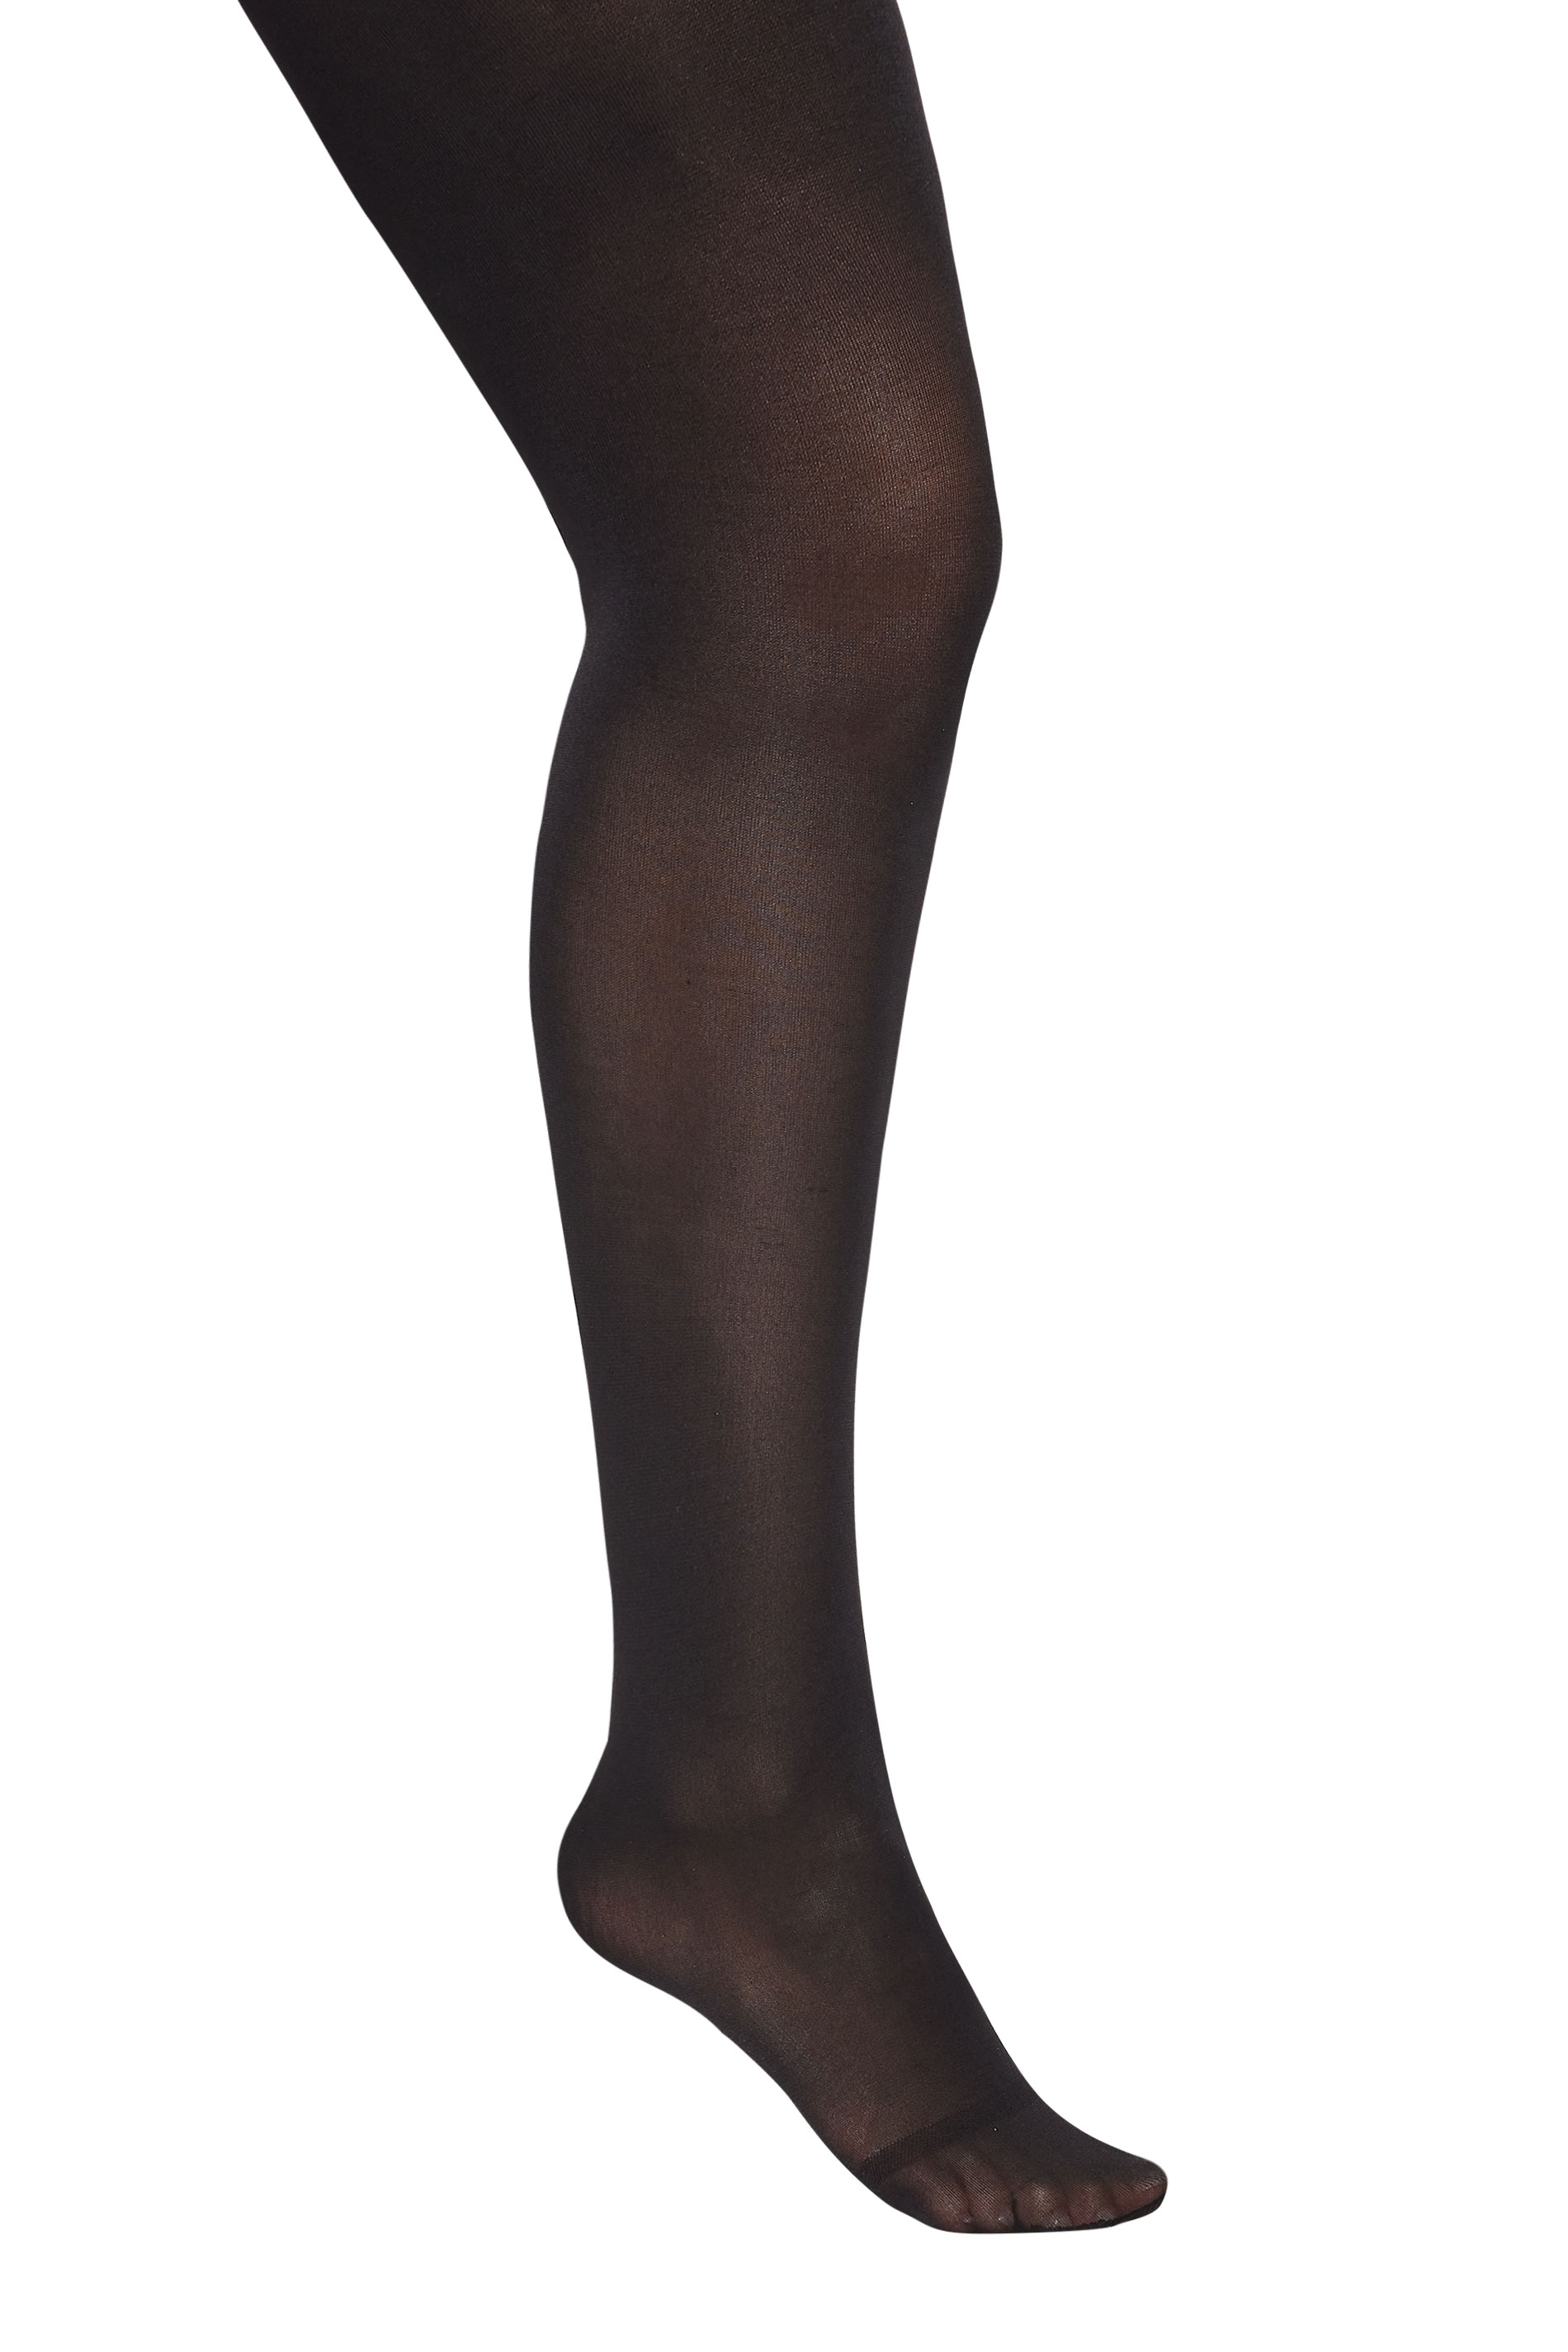 Tall Women's Black 90 Denier Premium Tights | Long Tall Sally  3